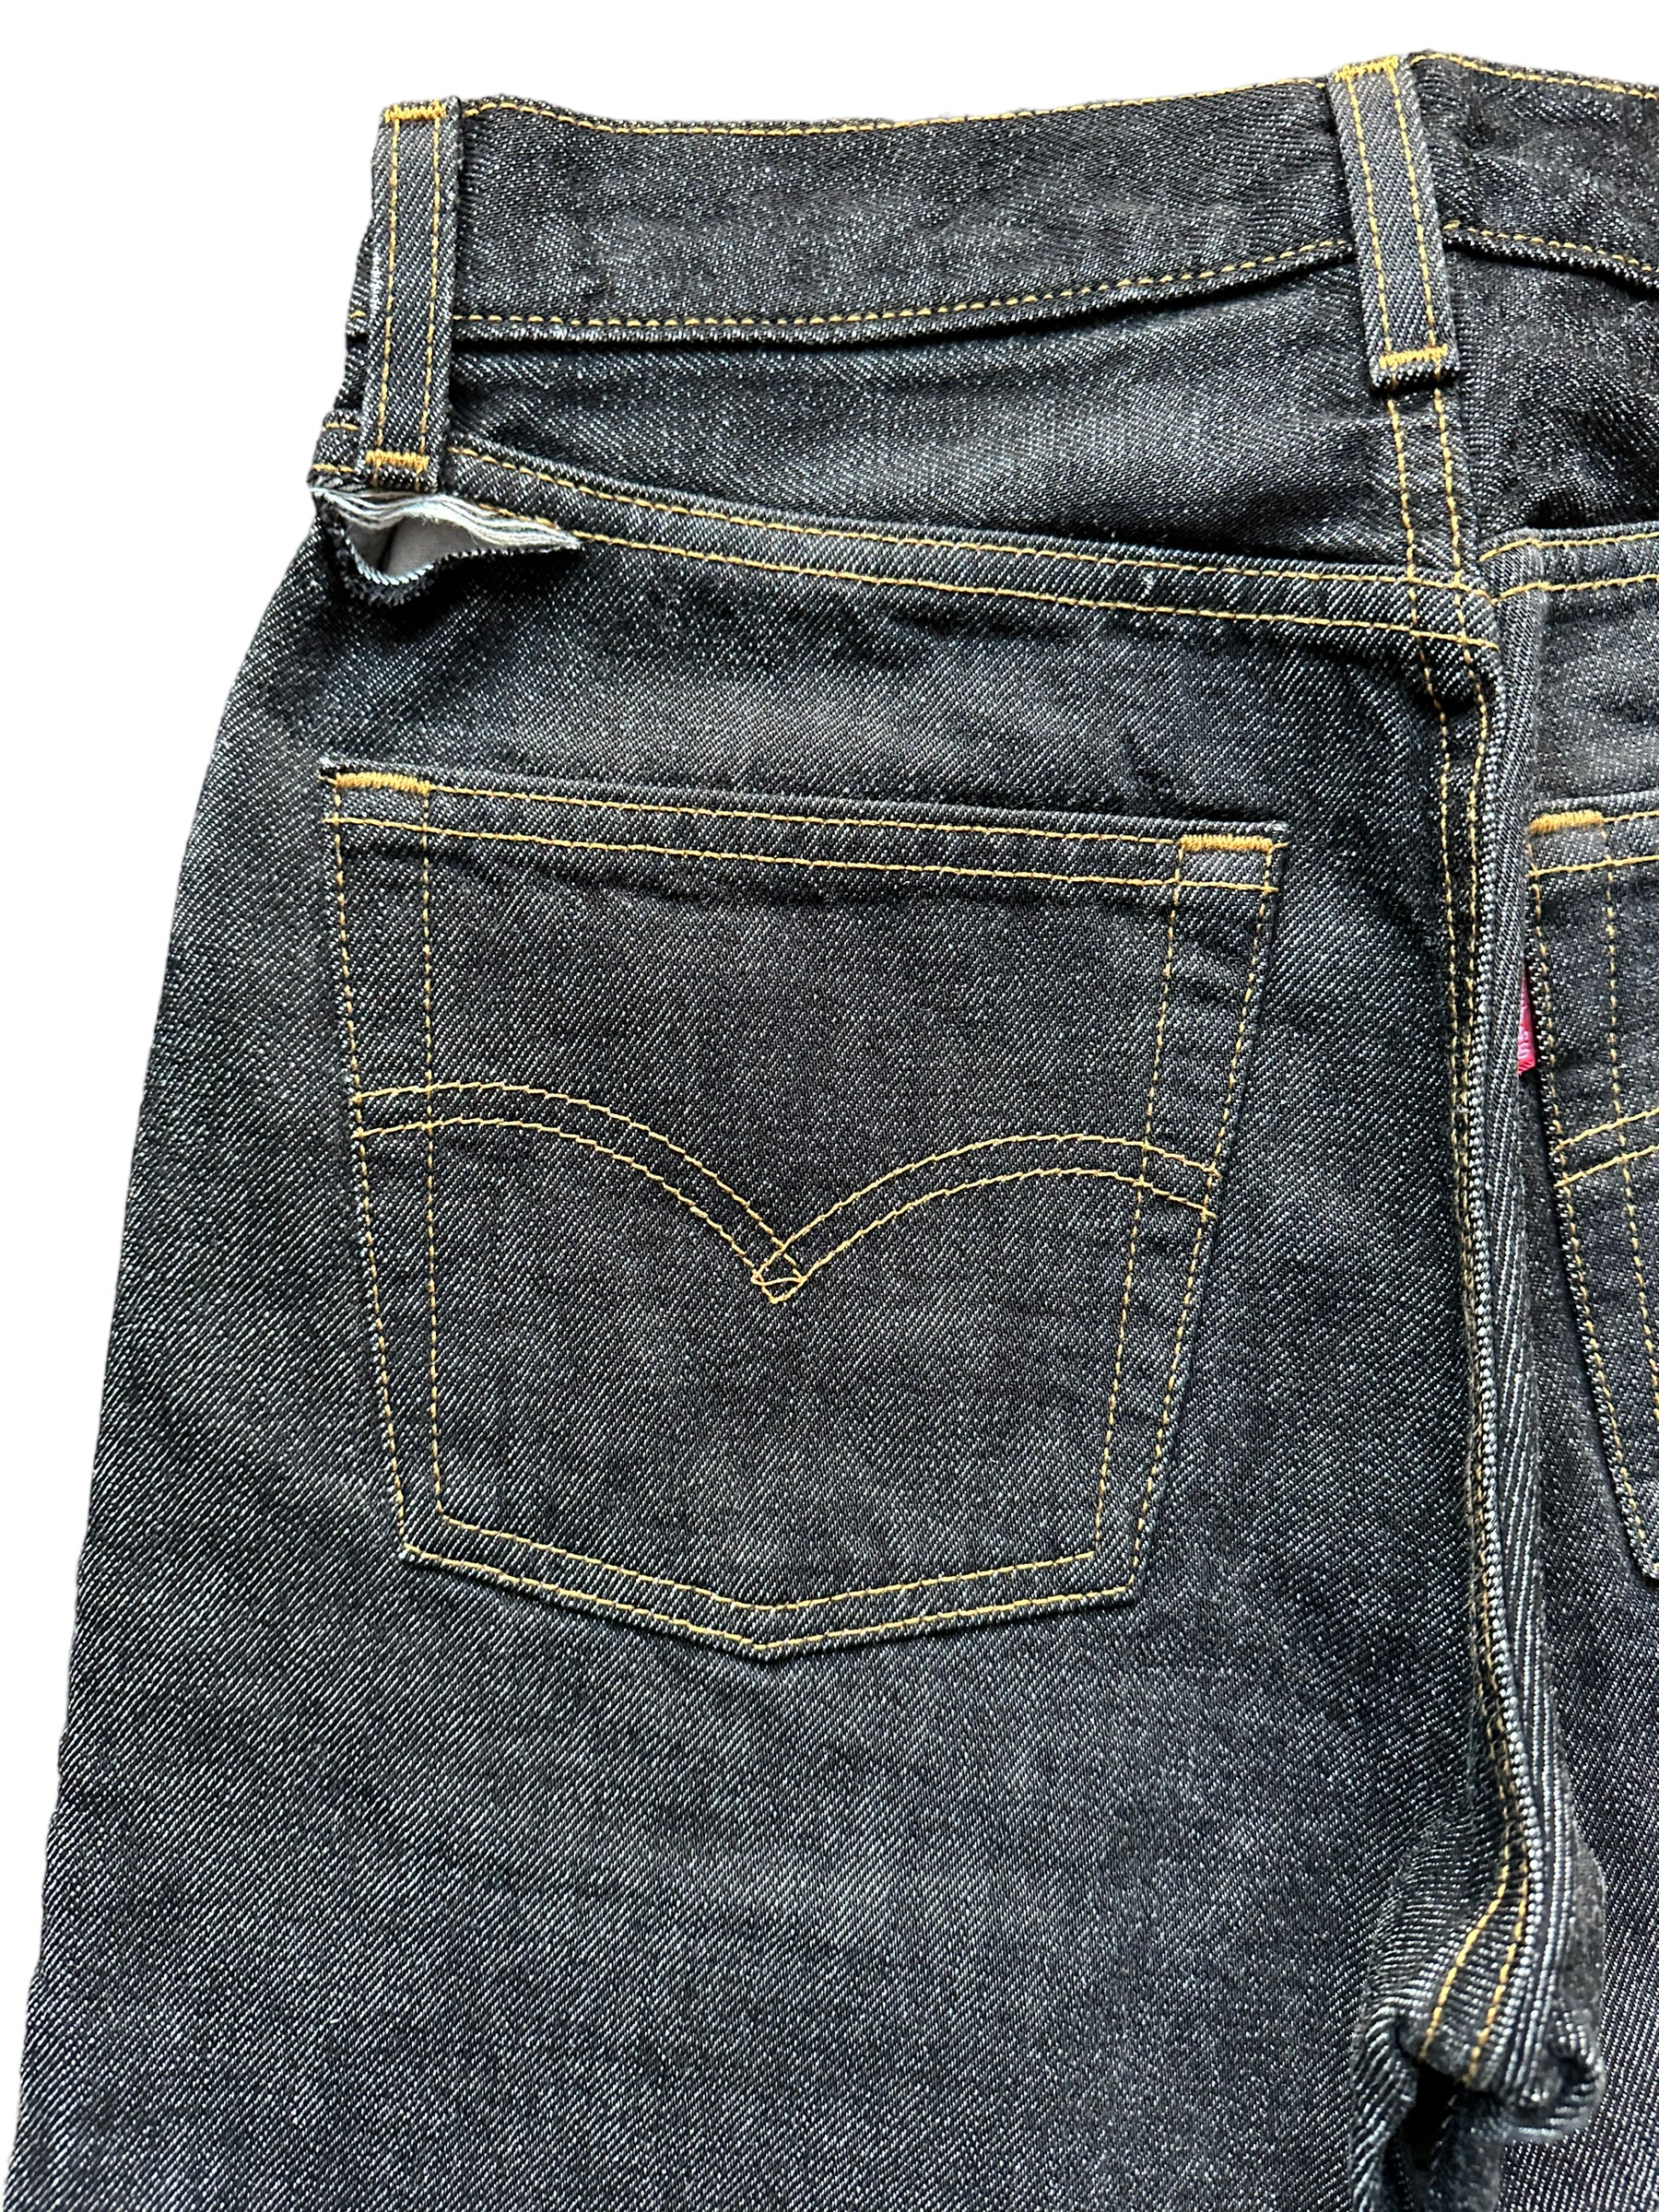 Back left pocket view of Deadstock 90s USA Levi's 501 Black Jeans 26x33 | Seattle Deadstock Vintage Jeans | Barn Owl Vintage Denim